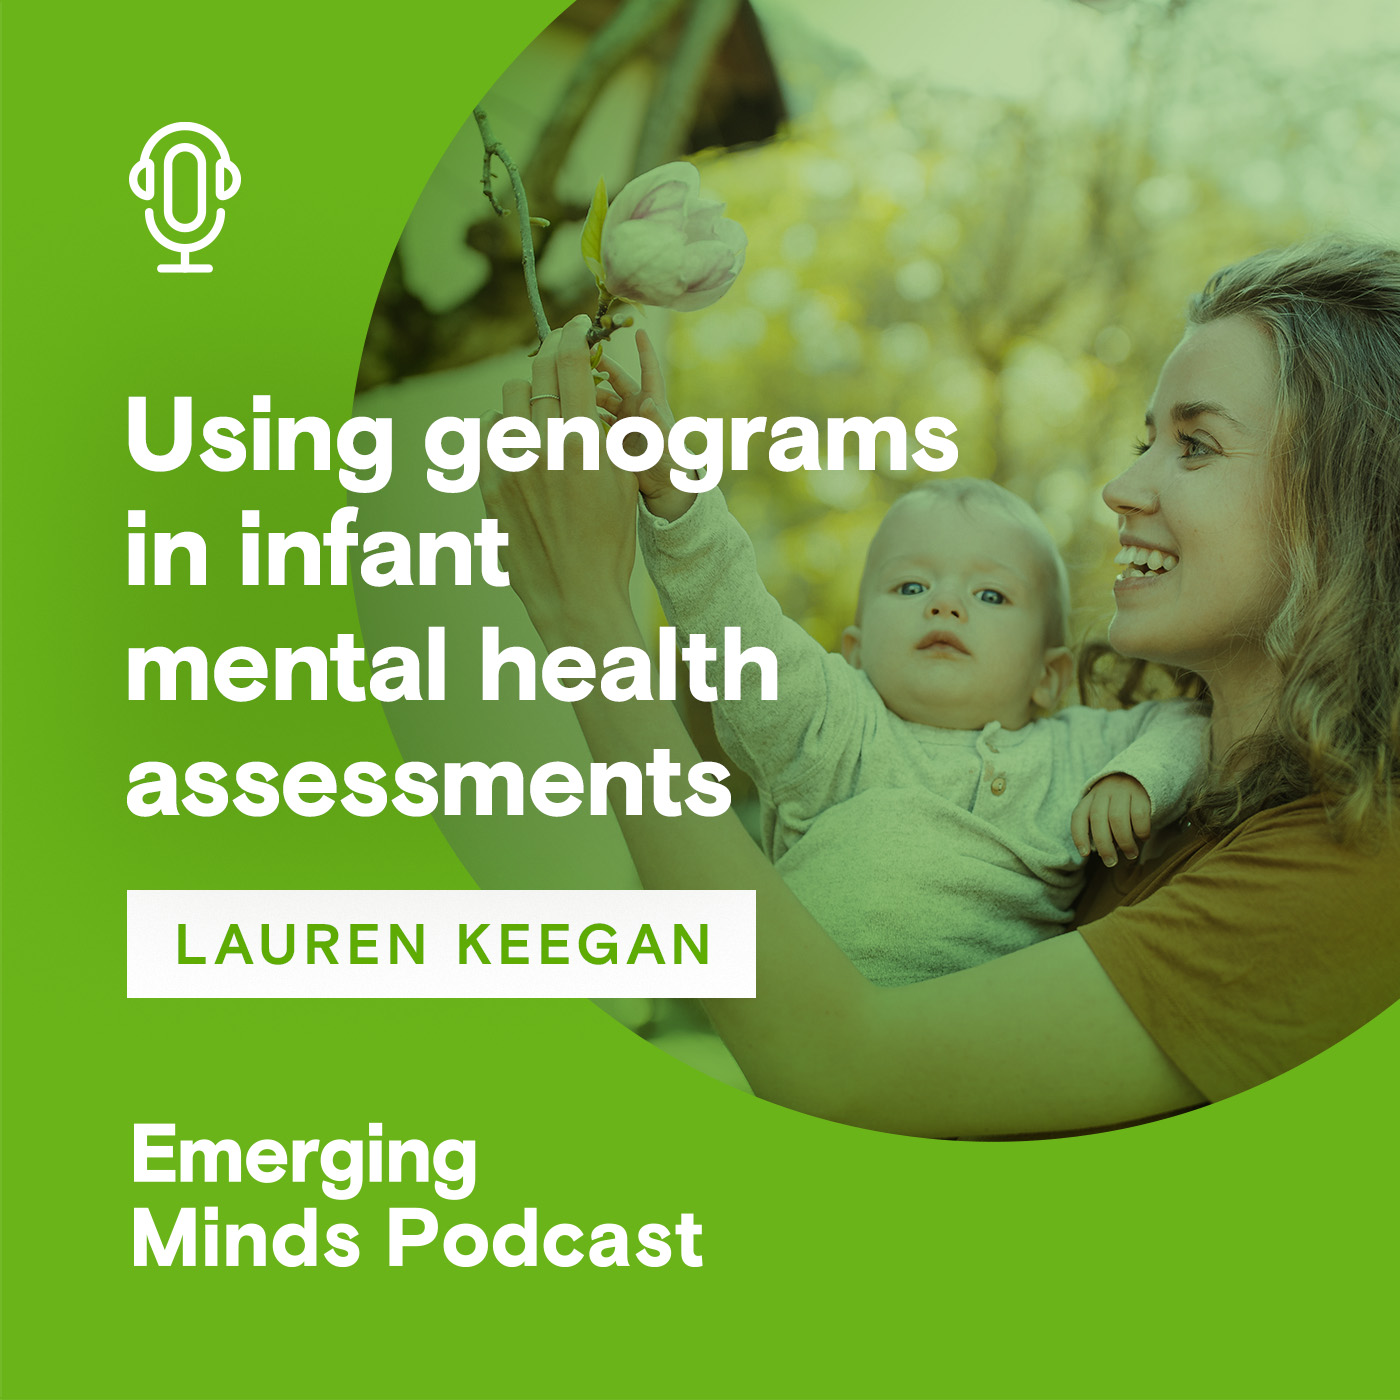 Using genograms in infant mental health assessments